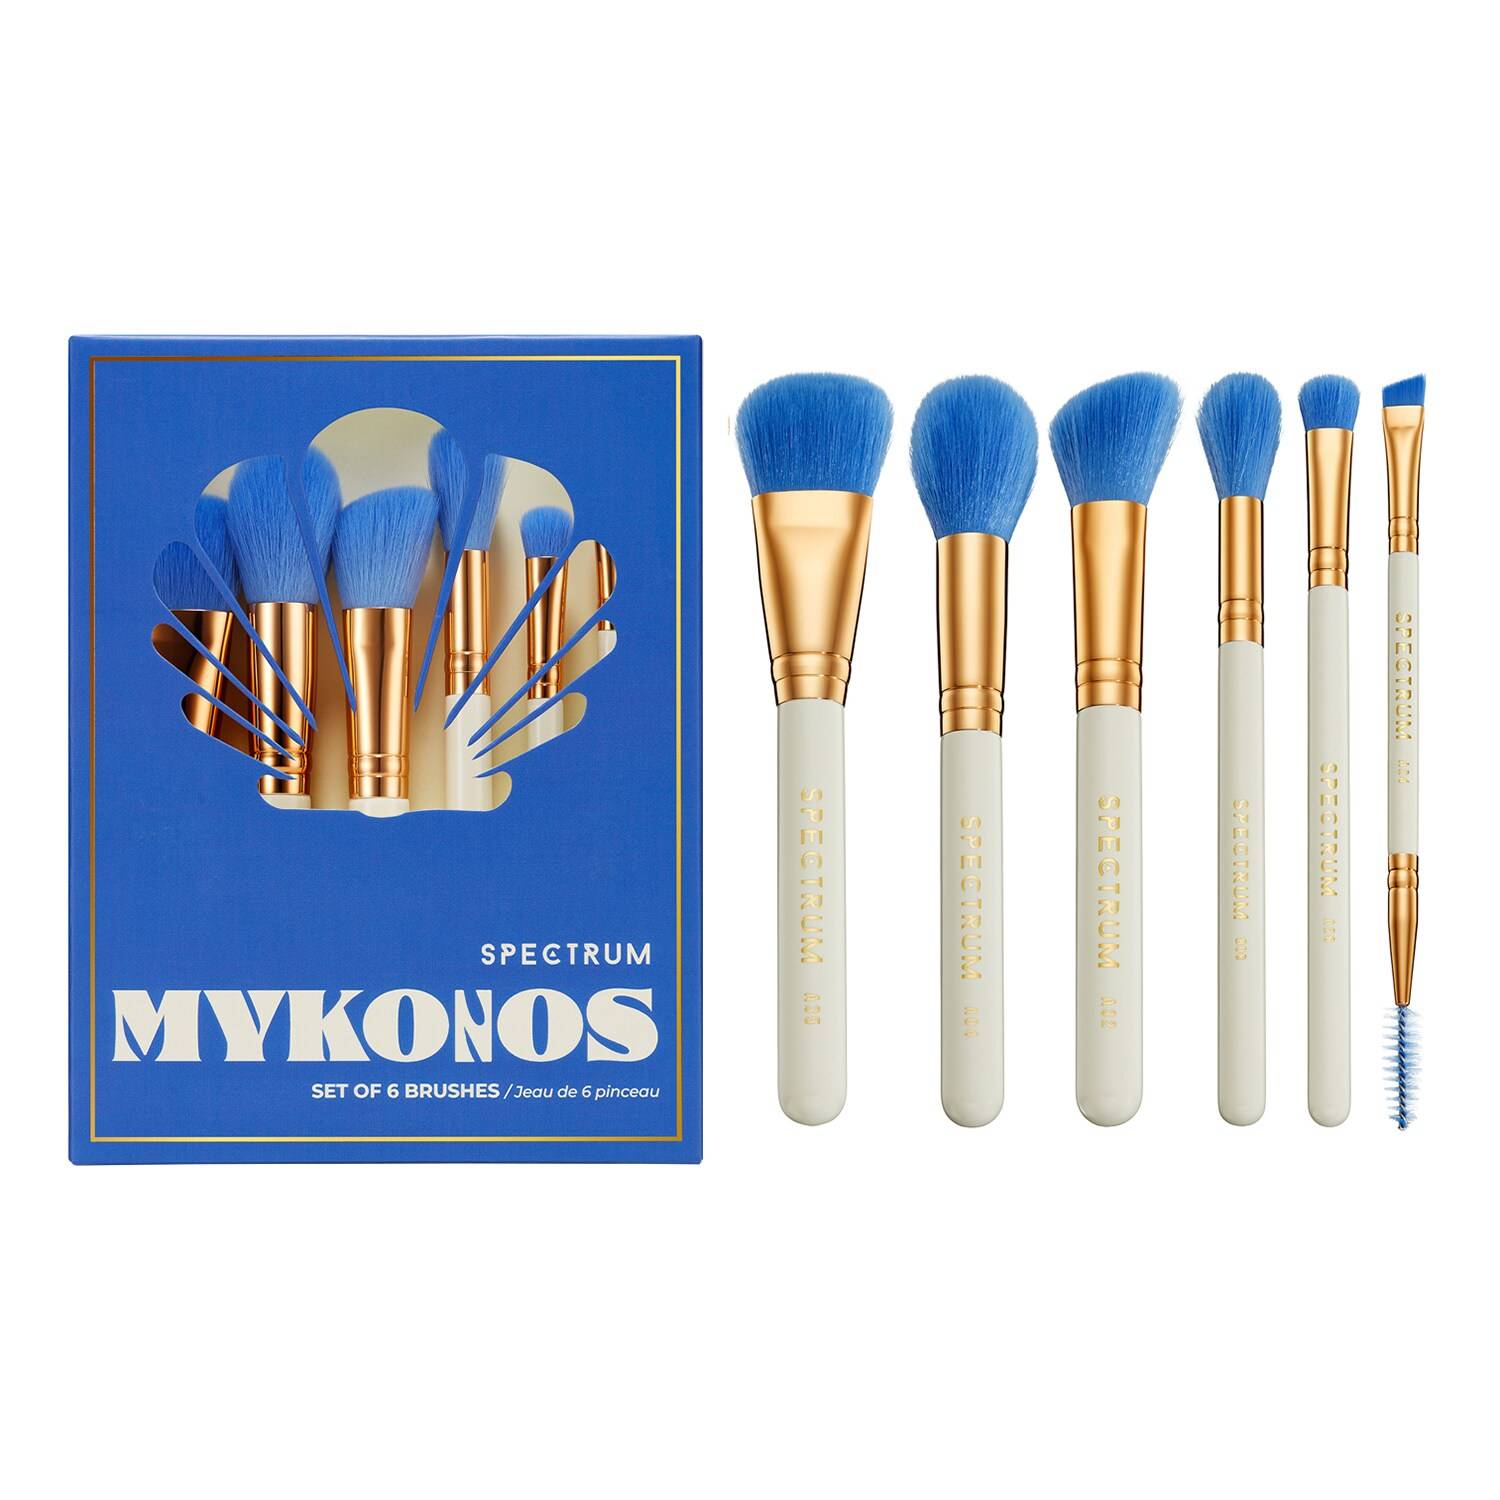 Spectrum Collection Mykonos 6 Piece Brush Set Set